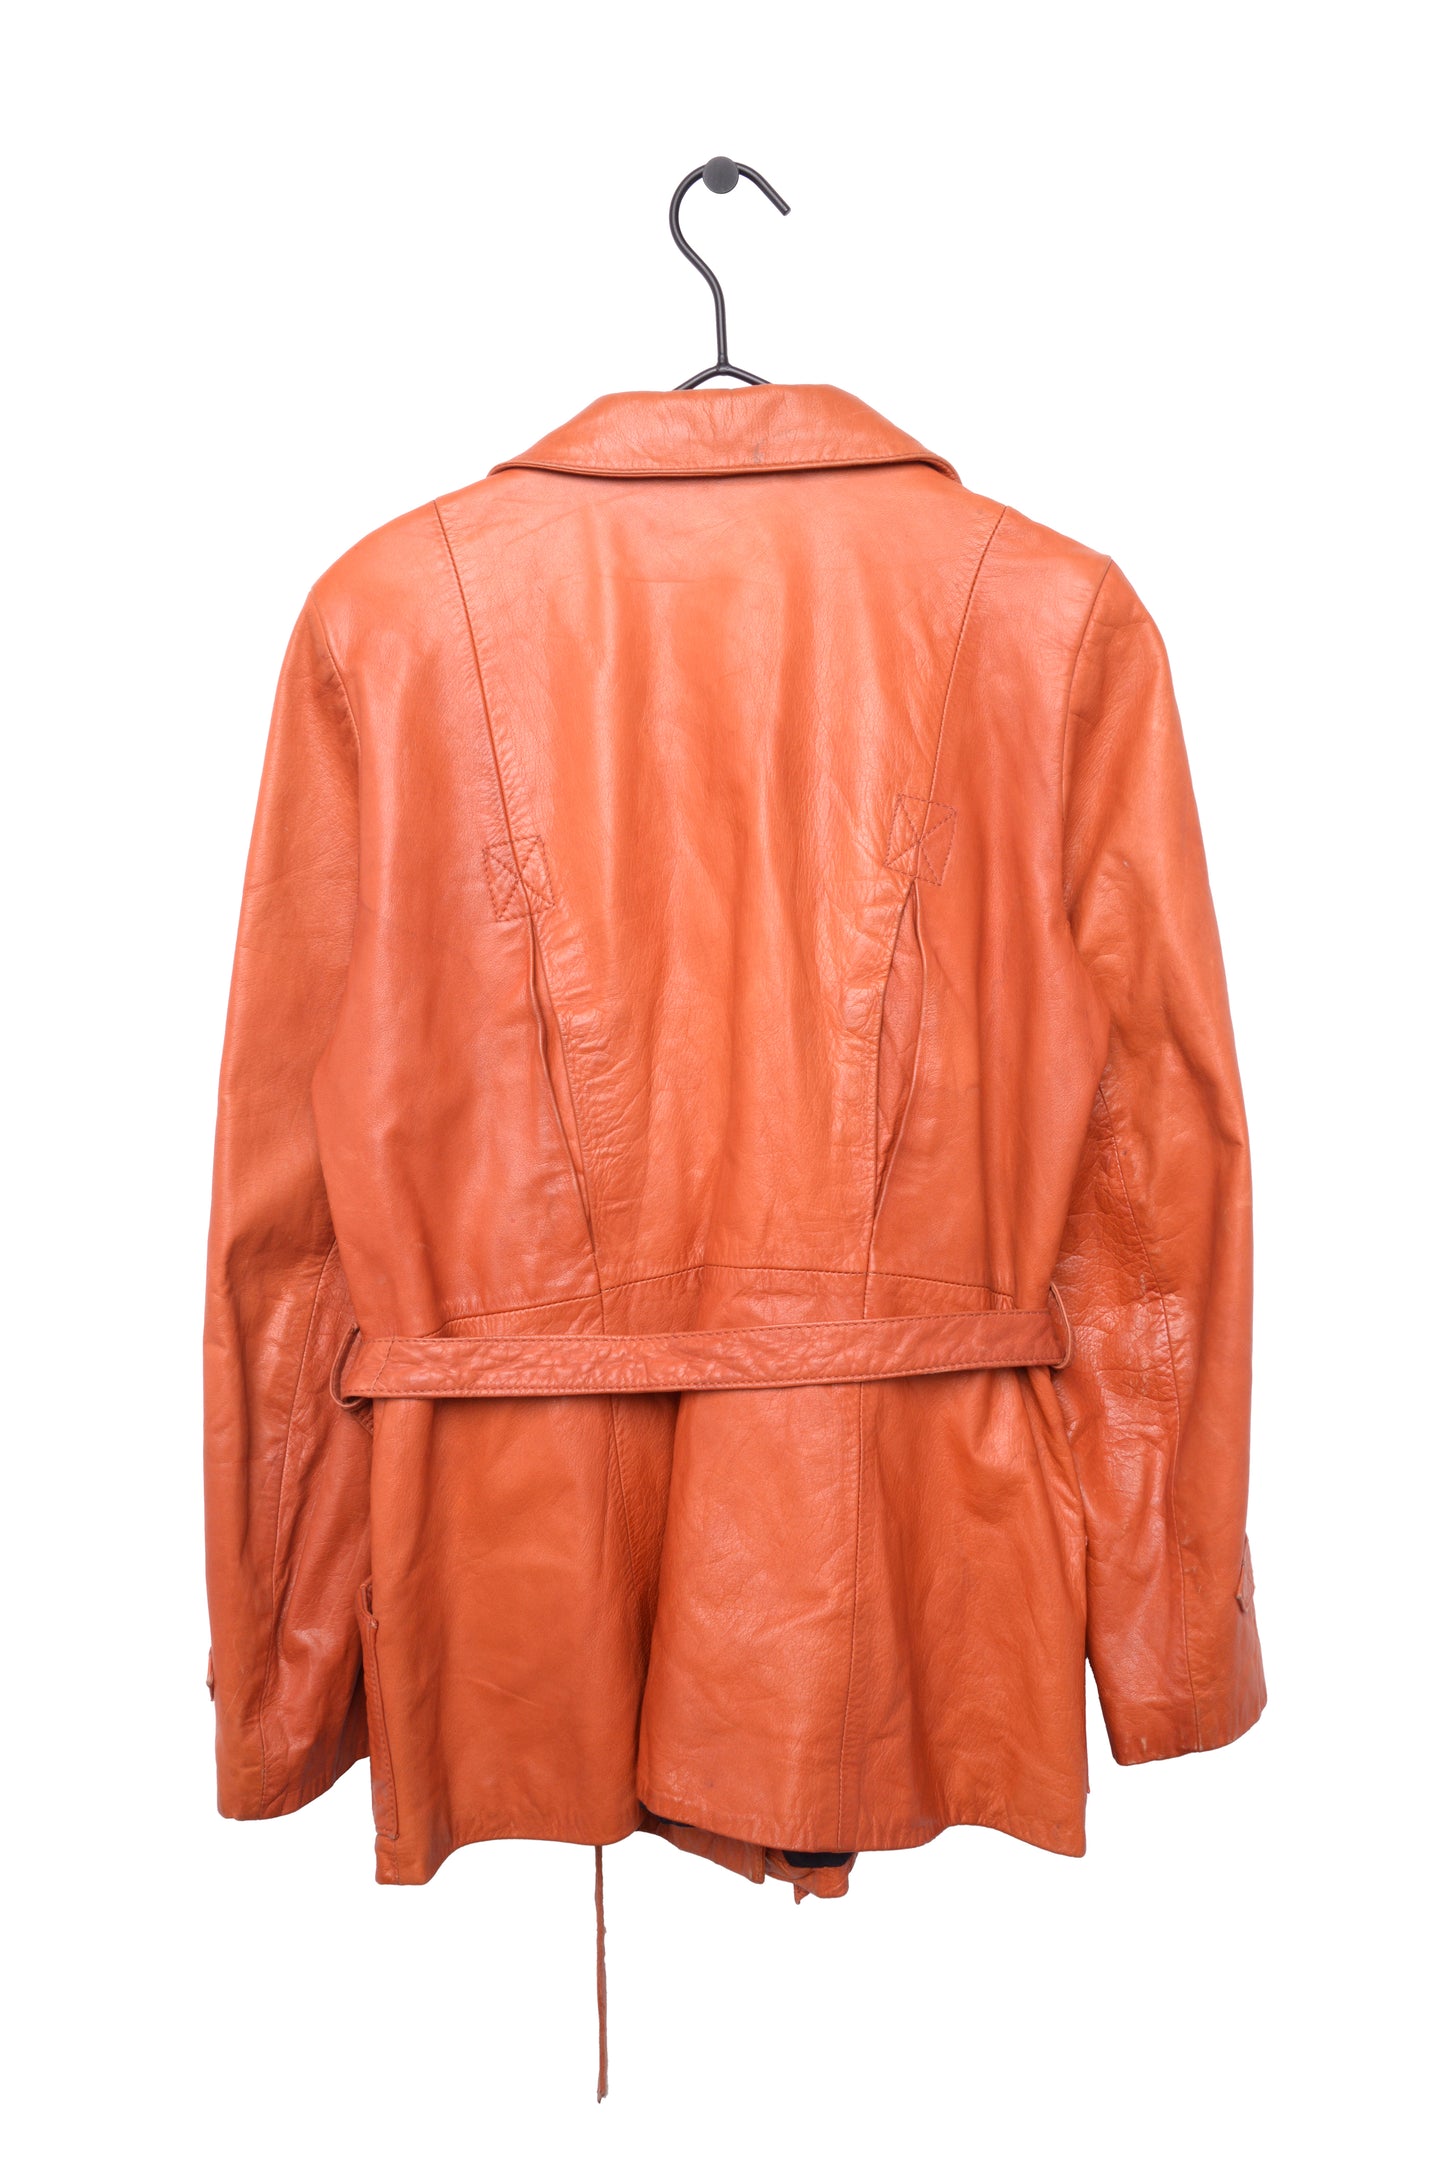 Wilsons Orange Belted Leather Jacket